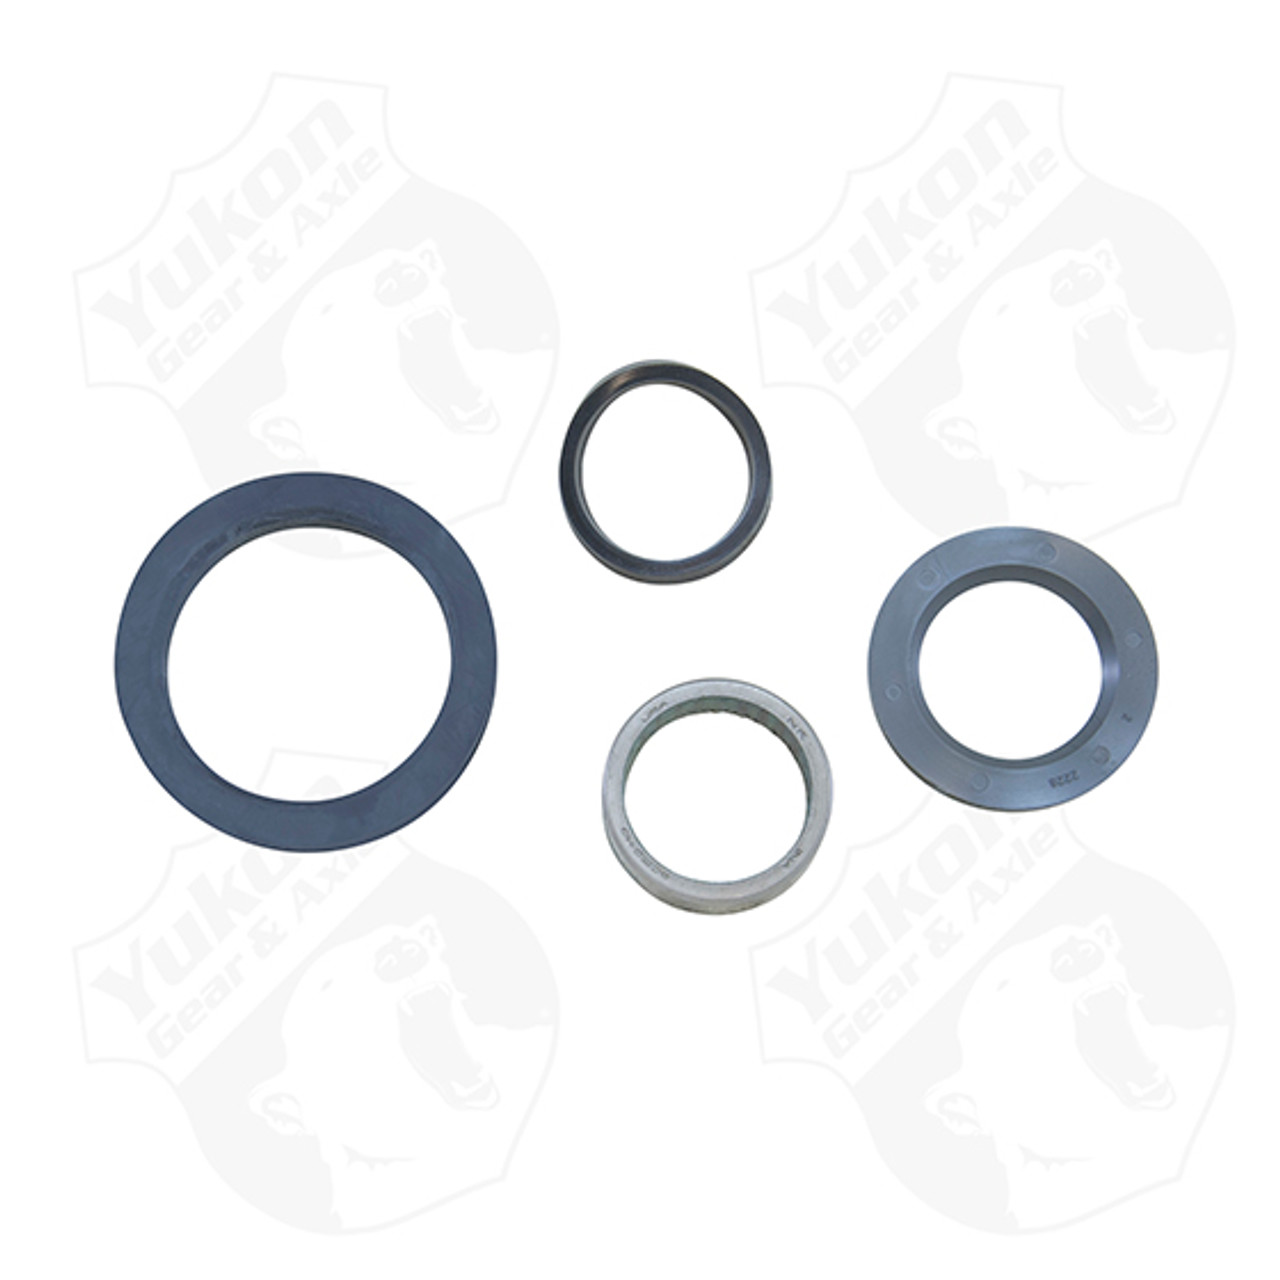 Spindle bearing & seal kit for Dana 30, Dana 44 & GM 8.5